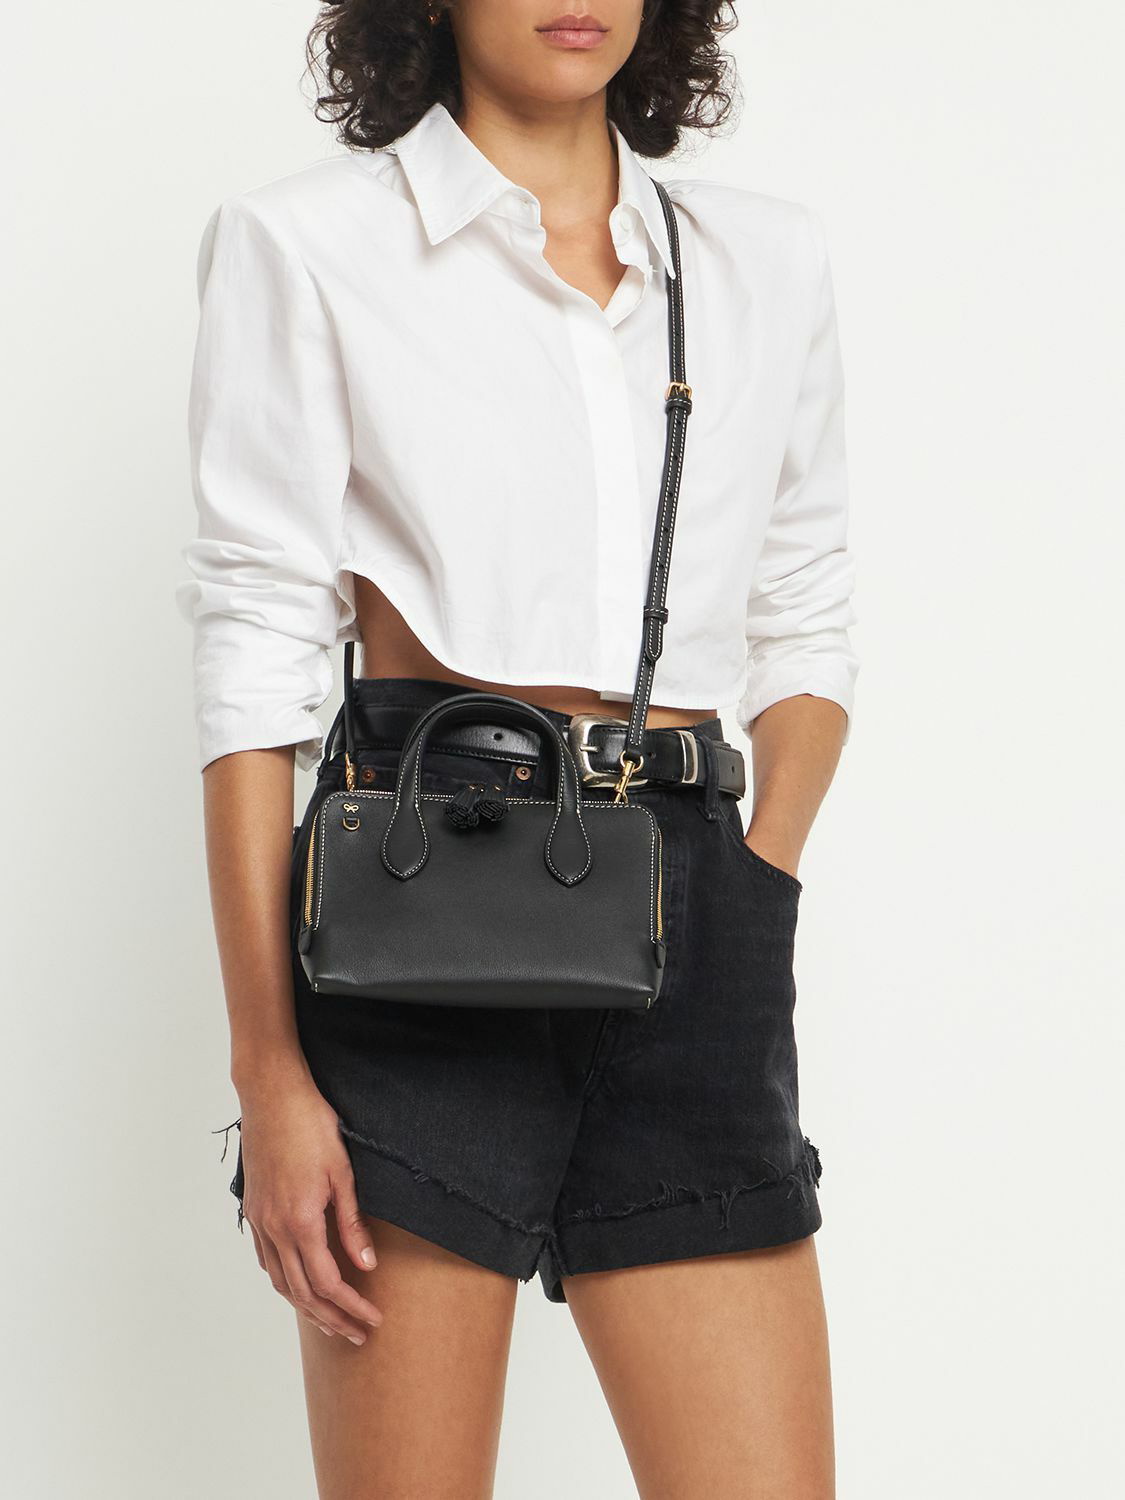 ANYA HINDMARCH - The Small Wedge Leather Top Handle Bag Anya Hindmarch